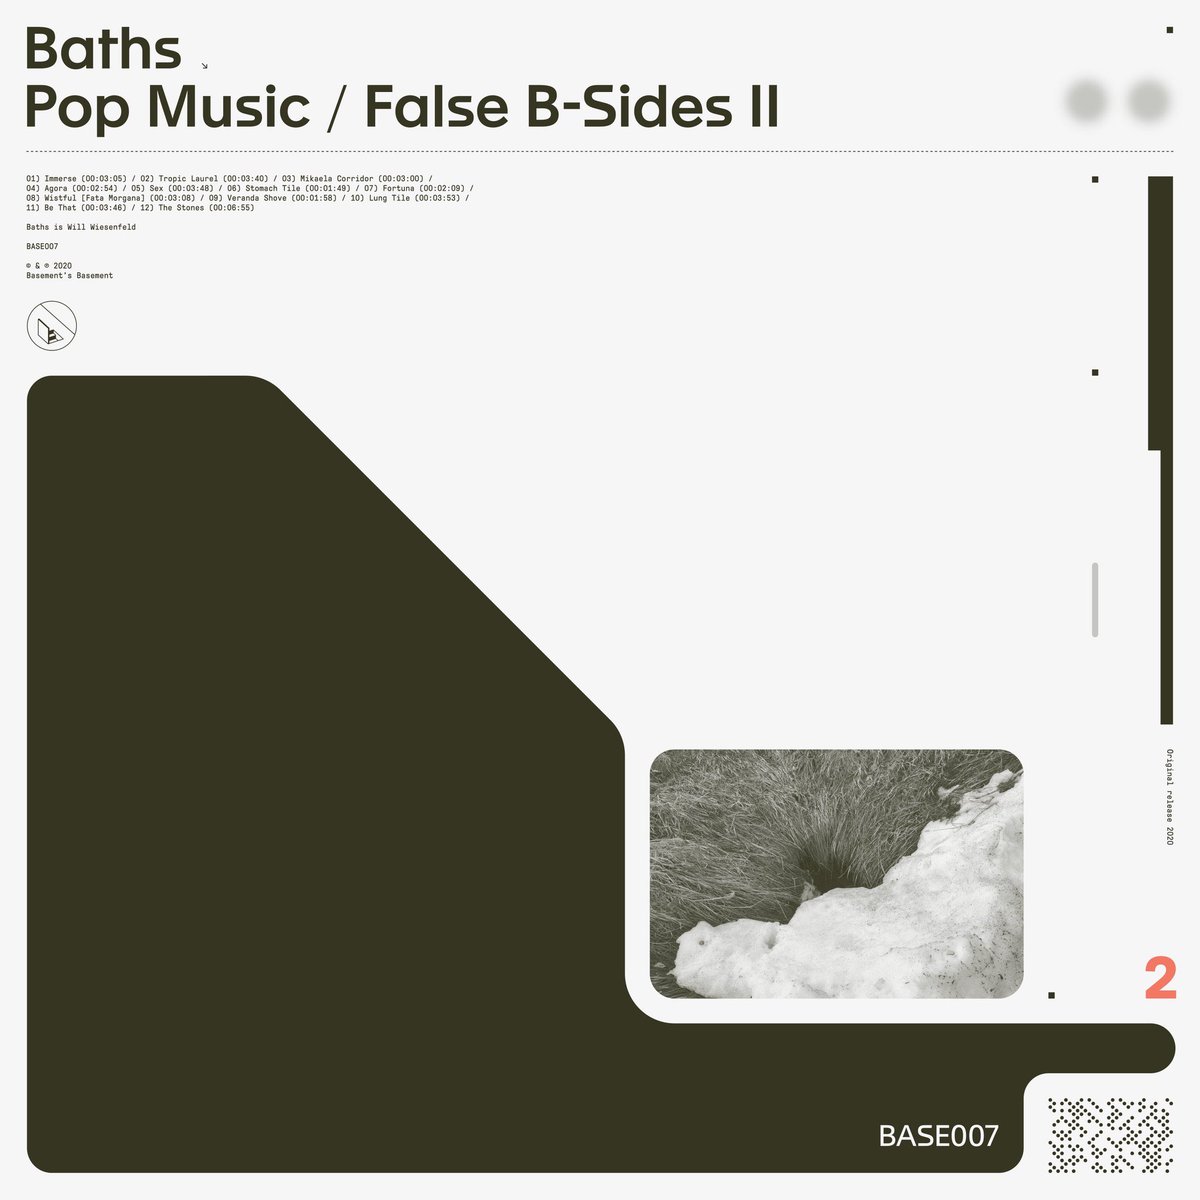 ALBUMPop Music / False B-Sides II https://bathsmusic.bandcamp.com/album/pop-music-false-b-sides-ii-2ft “Mikaela Corridor”+ “Wistful (Fata Morgana)”“The Stones” by Morgan Greenwood ( @grinbucket) and IManagement - Shaun Koplow ( @iamsodapop)Design - Cory Schmitz ( @CorySchmitz)Mastering - John Tejada ( @johntejada)